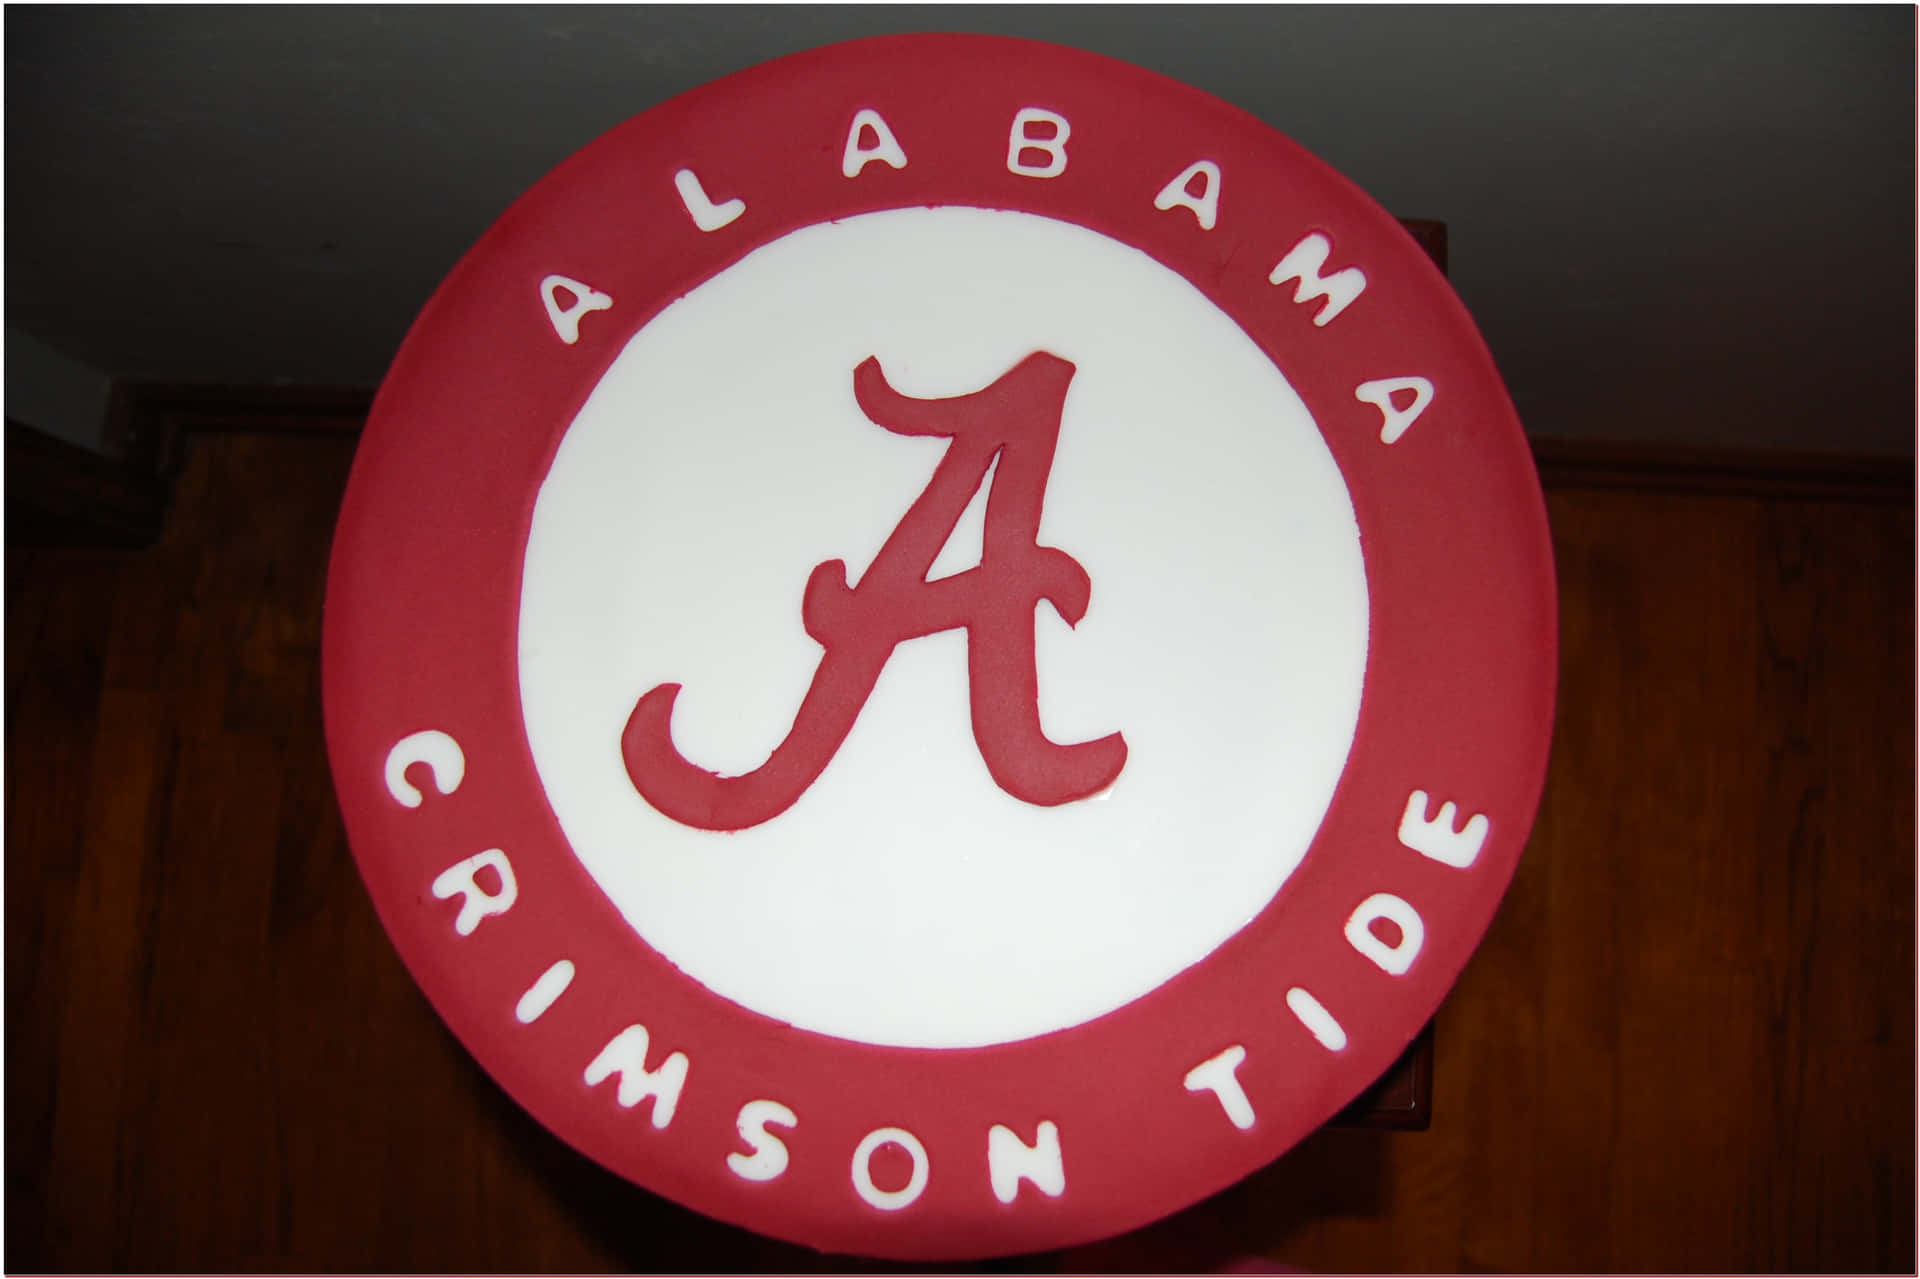 Roll Tide Roll for the Alabama Crimson Tide